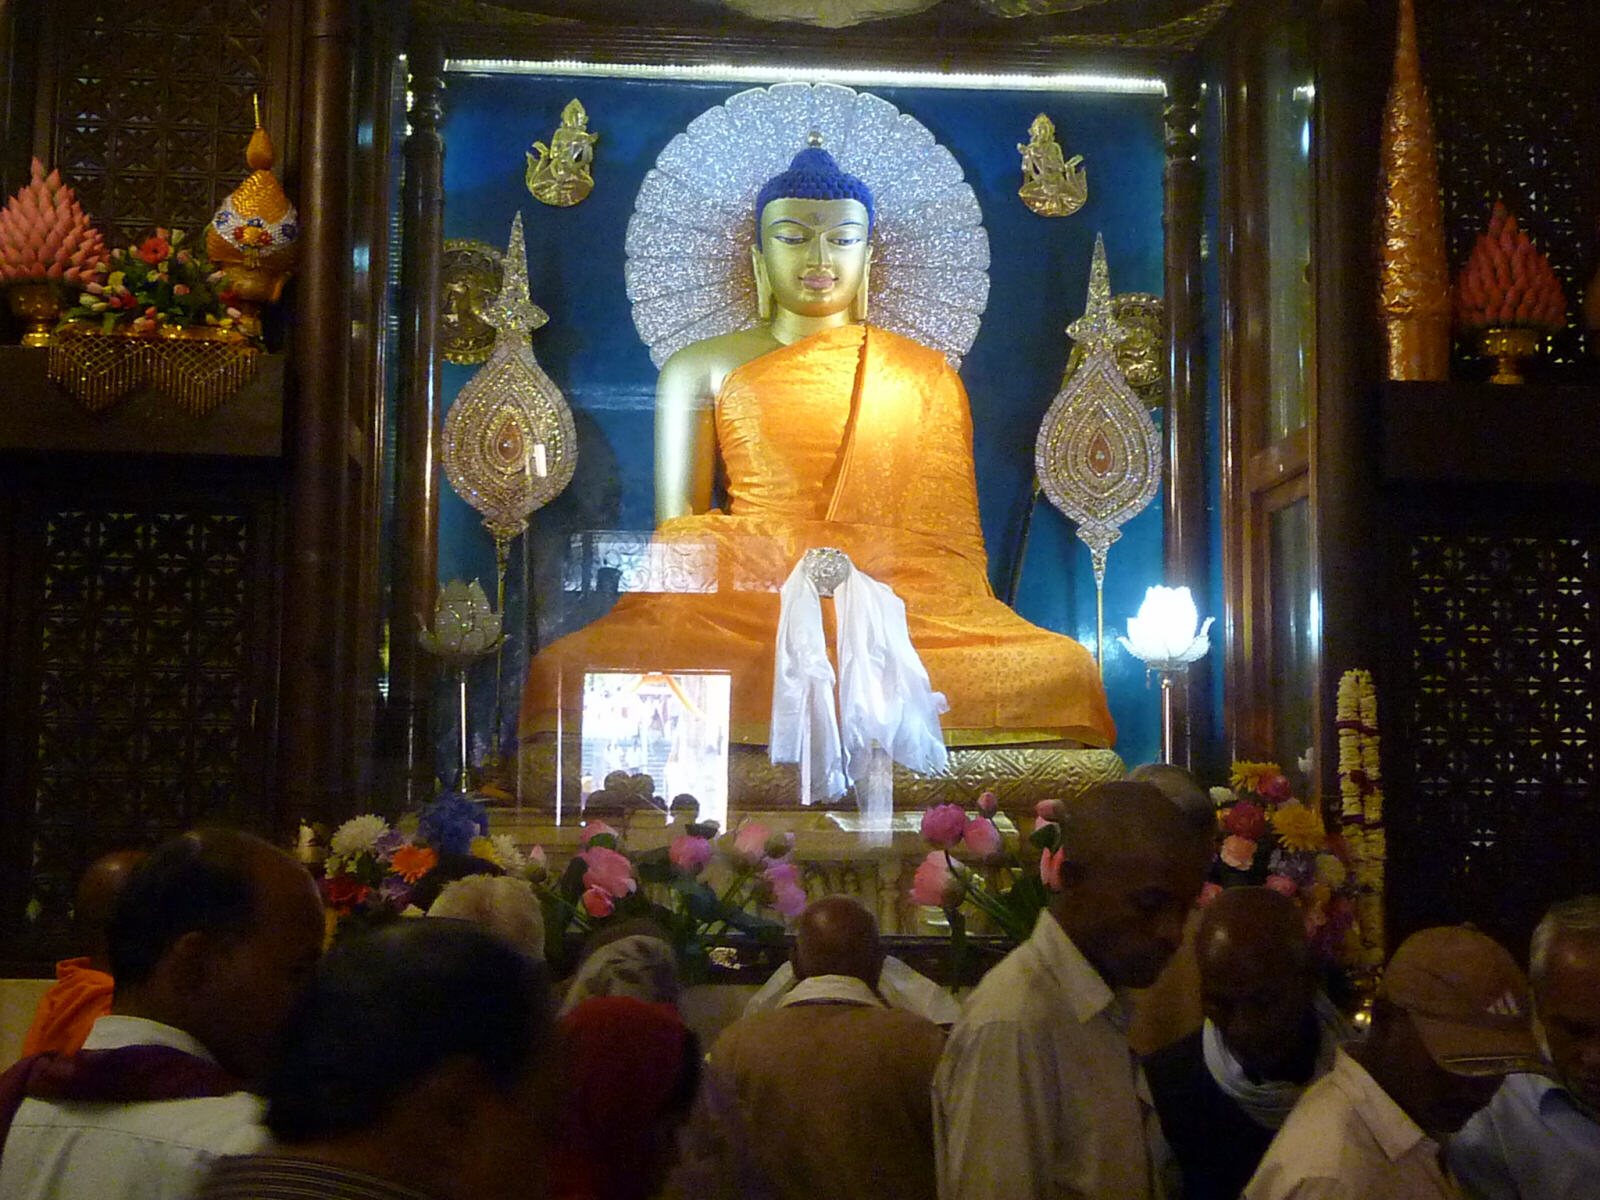 Inside the Mahabodi Temple in Bodhgaya, India